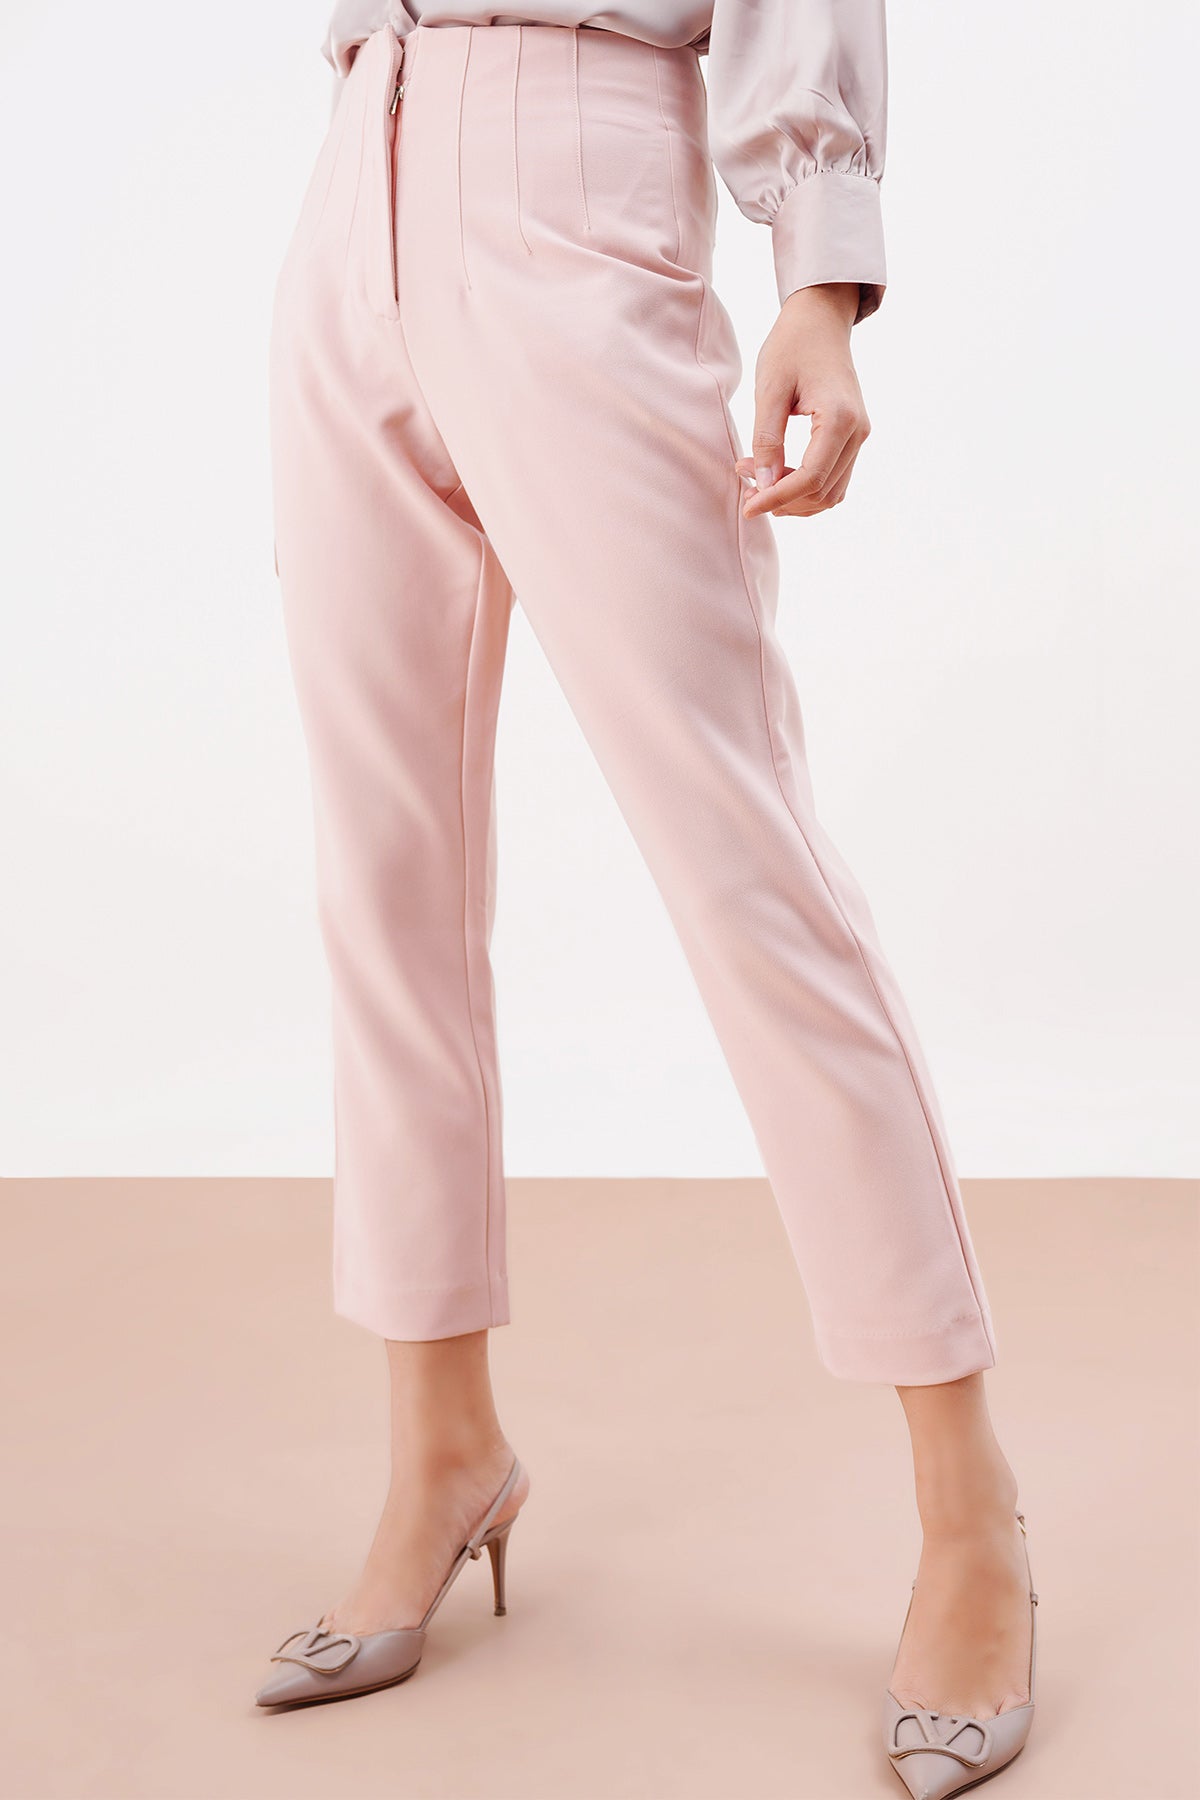 Hot pink high waisted pants